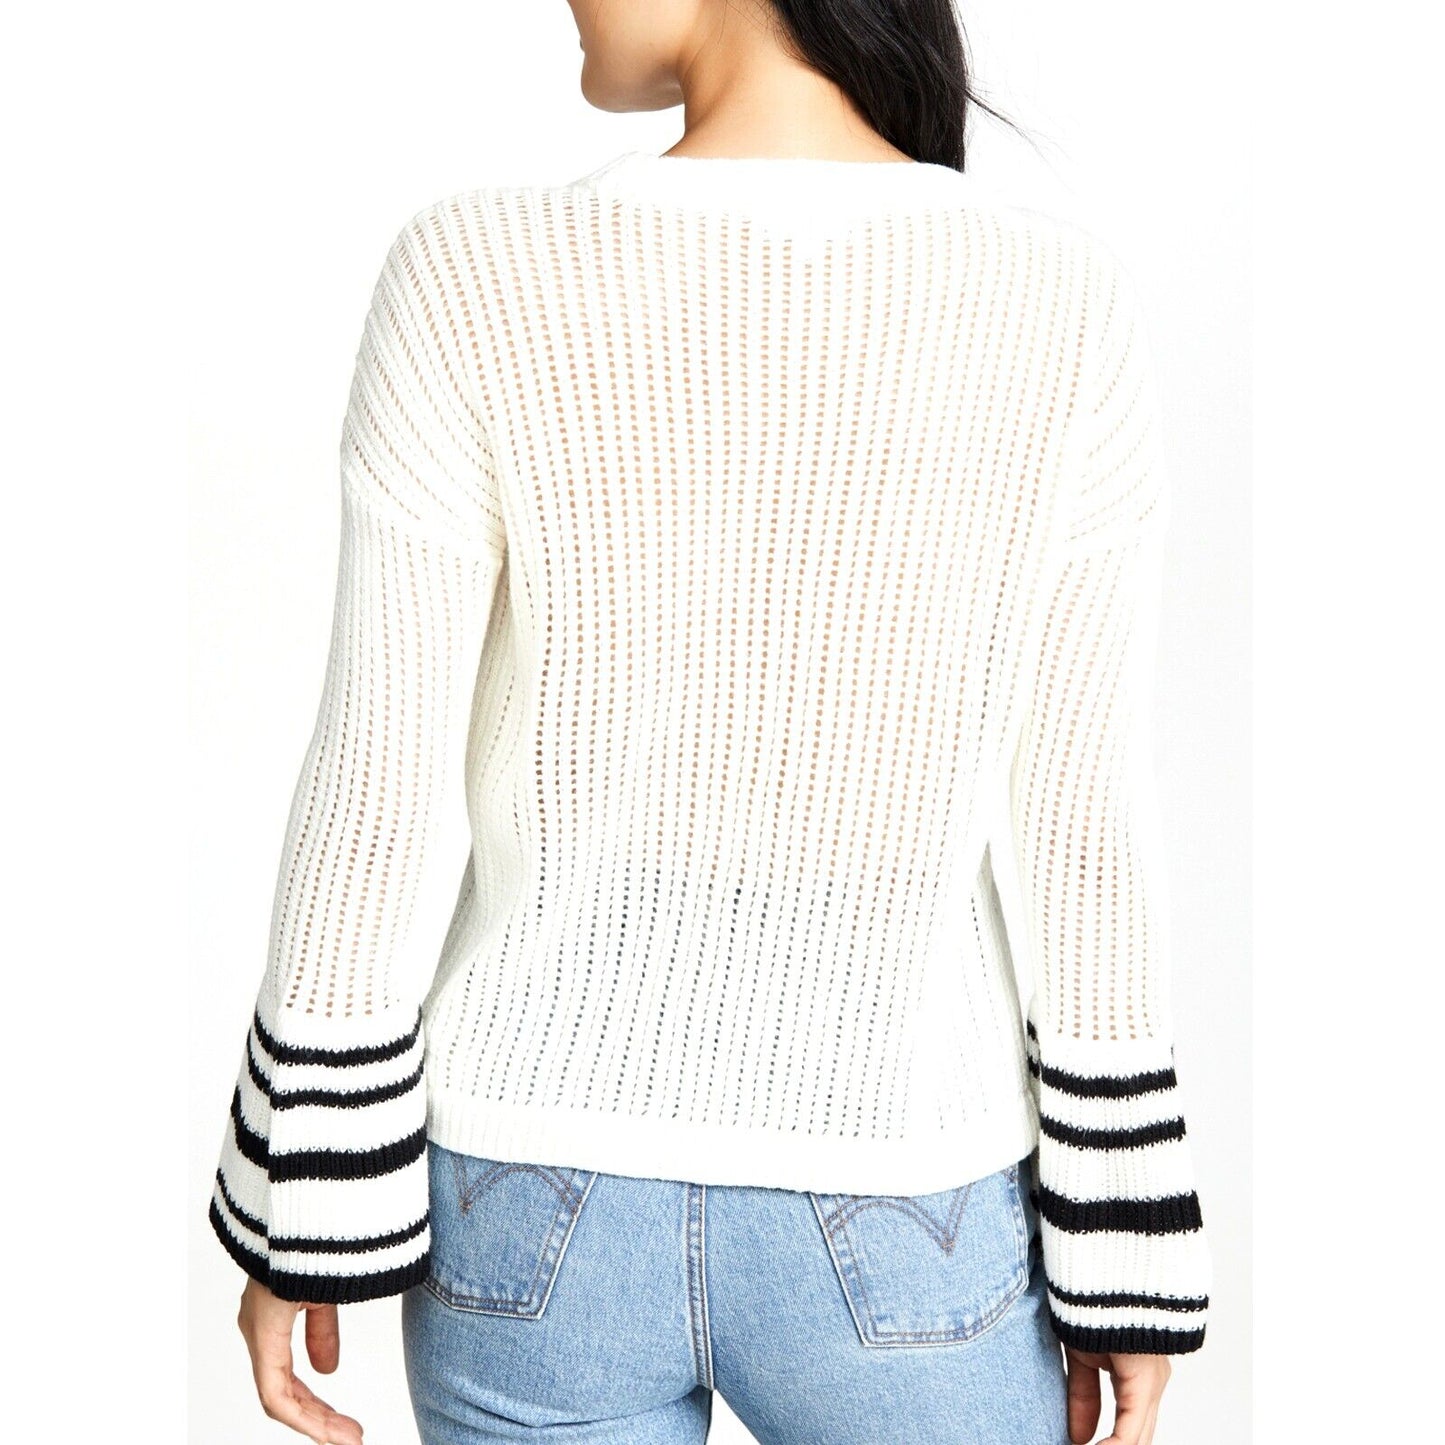 NWT Jack By BB Dakota Flare Sleeves Stripe Top Sweater. Size: S,M